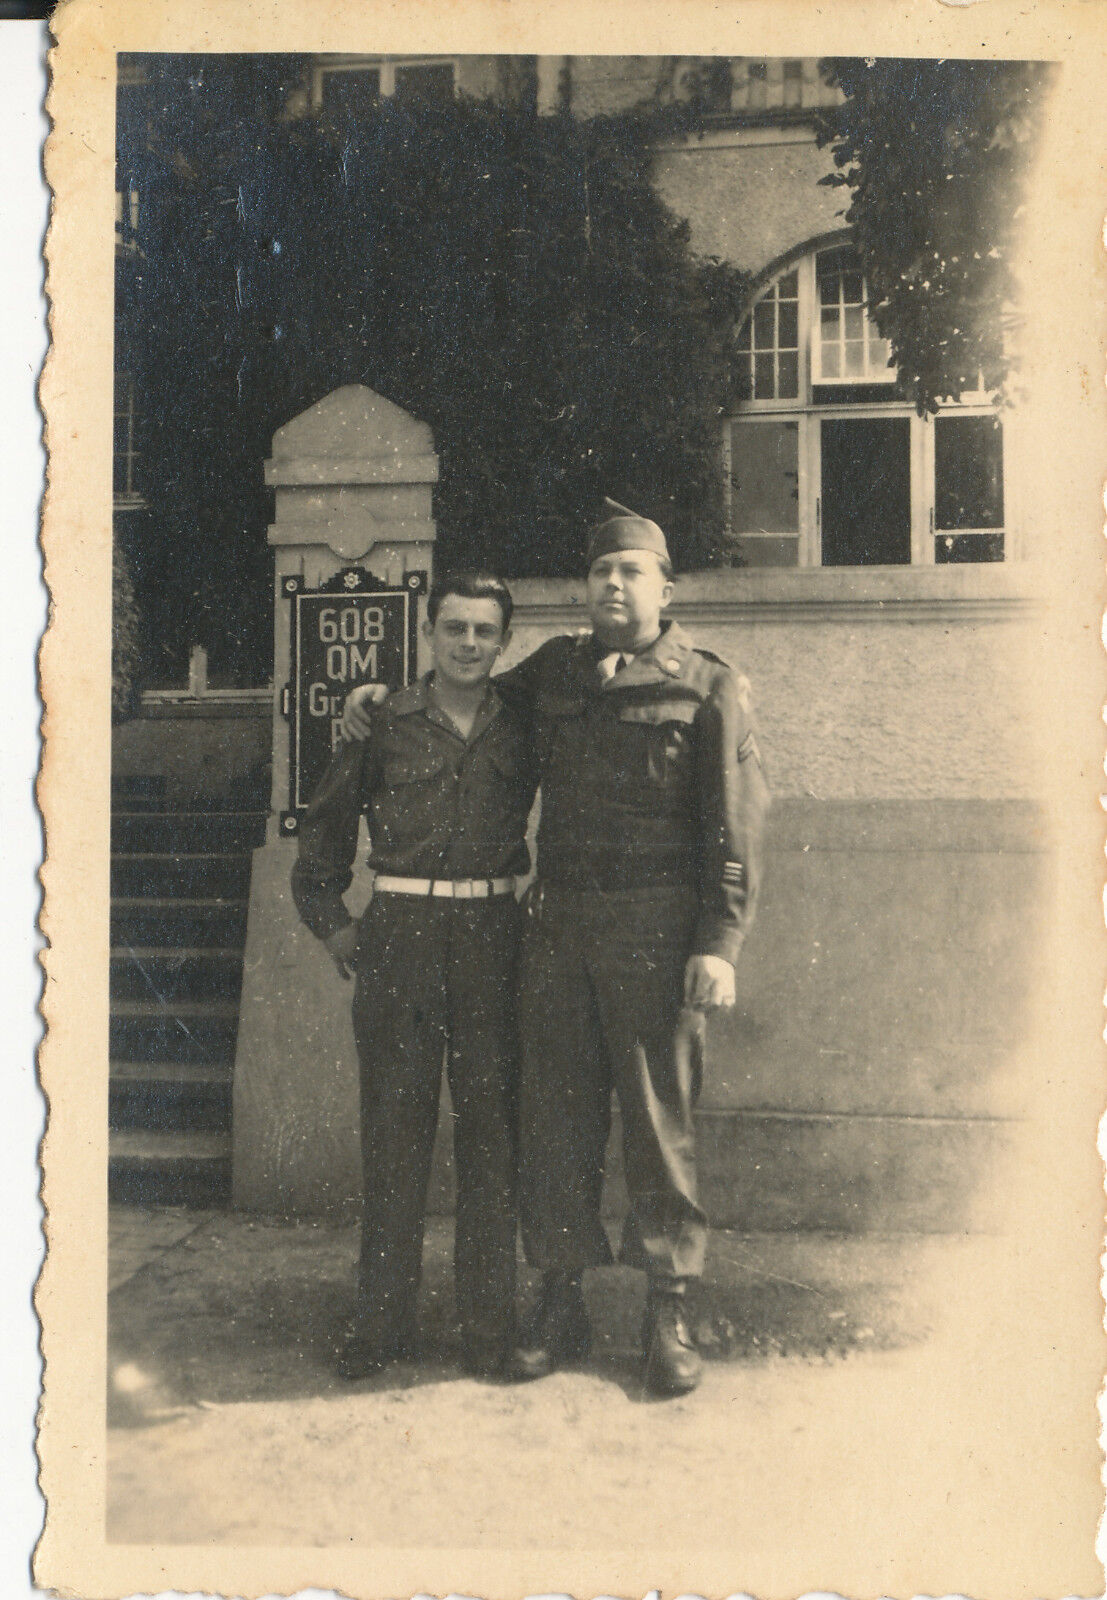  1946 US Army 608th QM HQ sign GI\'s Bienenbuttel Germany Photo 2 buddies